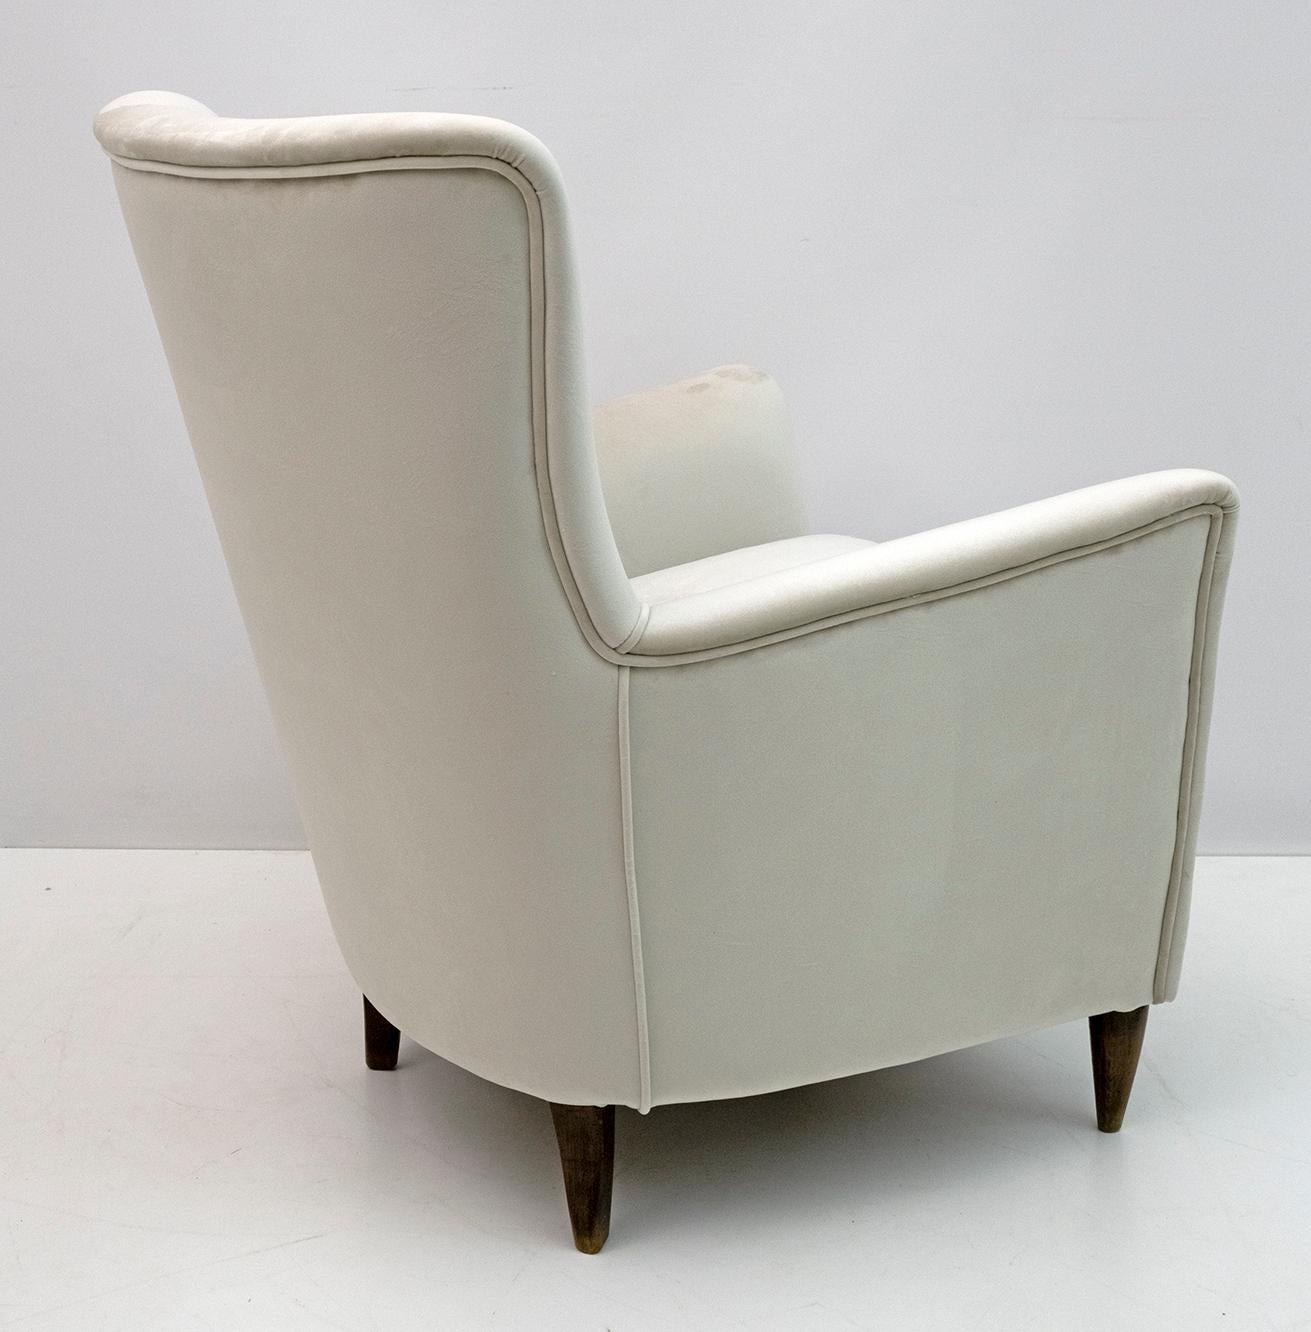 Pair of Gio Ponti Style Mid-Century Modern Italian Velvet Armchairs for Isa, 50s For Sale 4